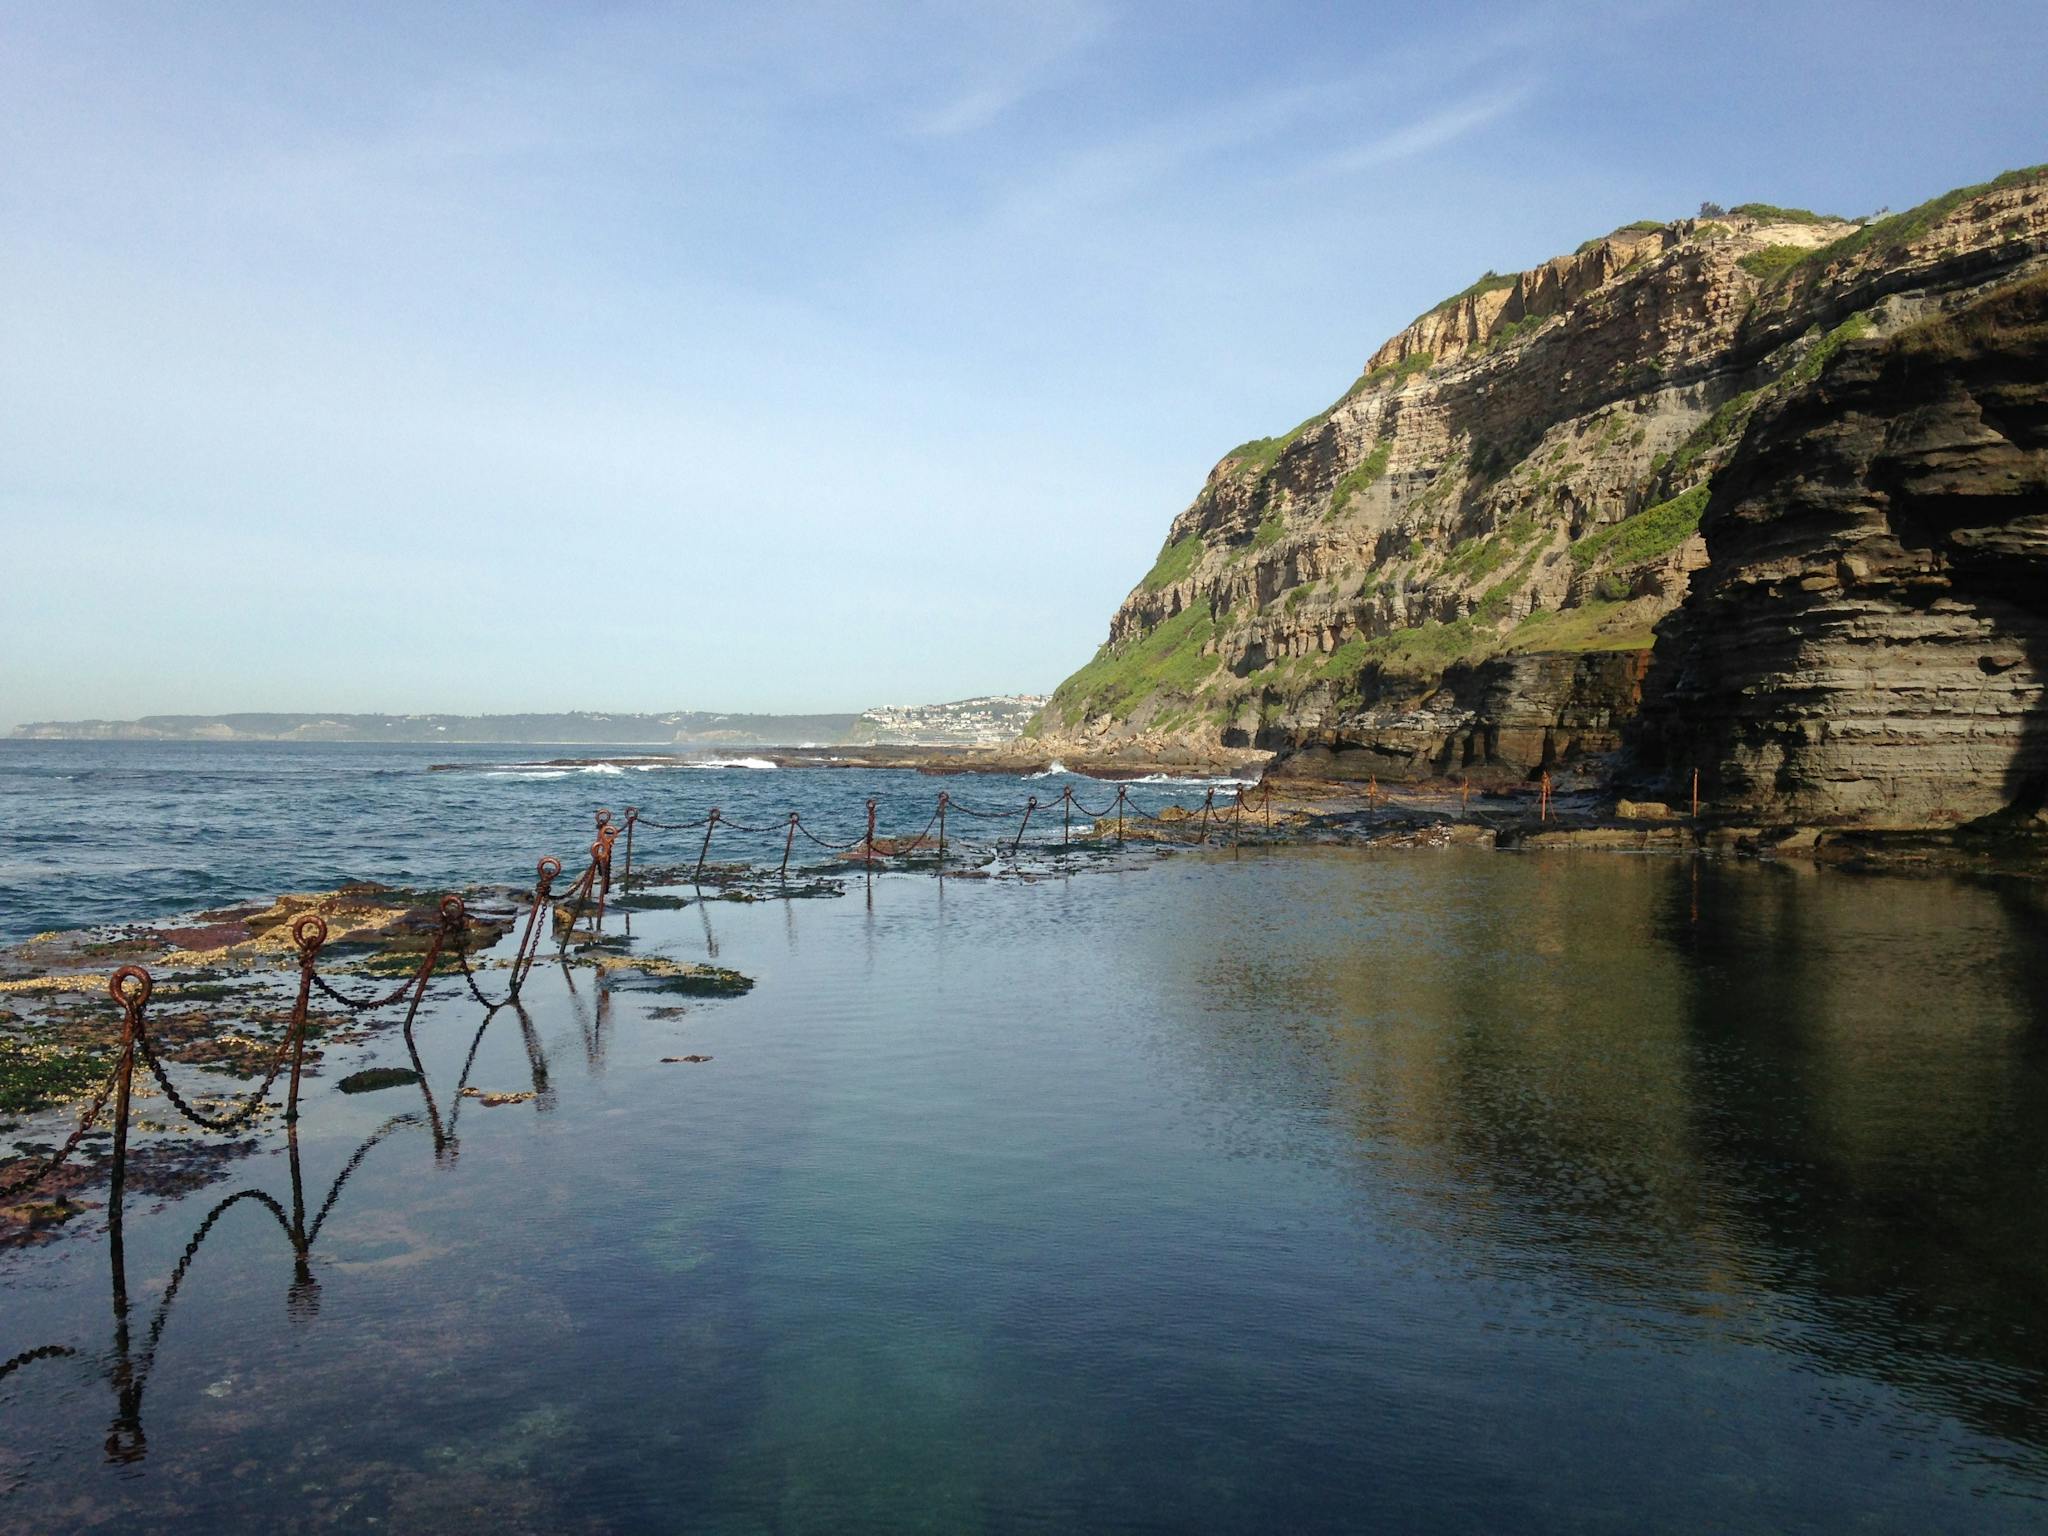 A seaside pool called the Bogey Hole dug into a rock platform underneath cliffs